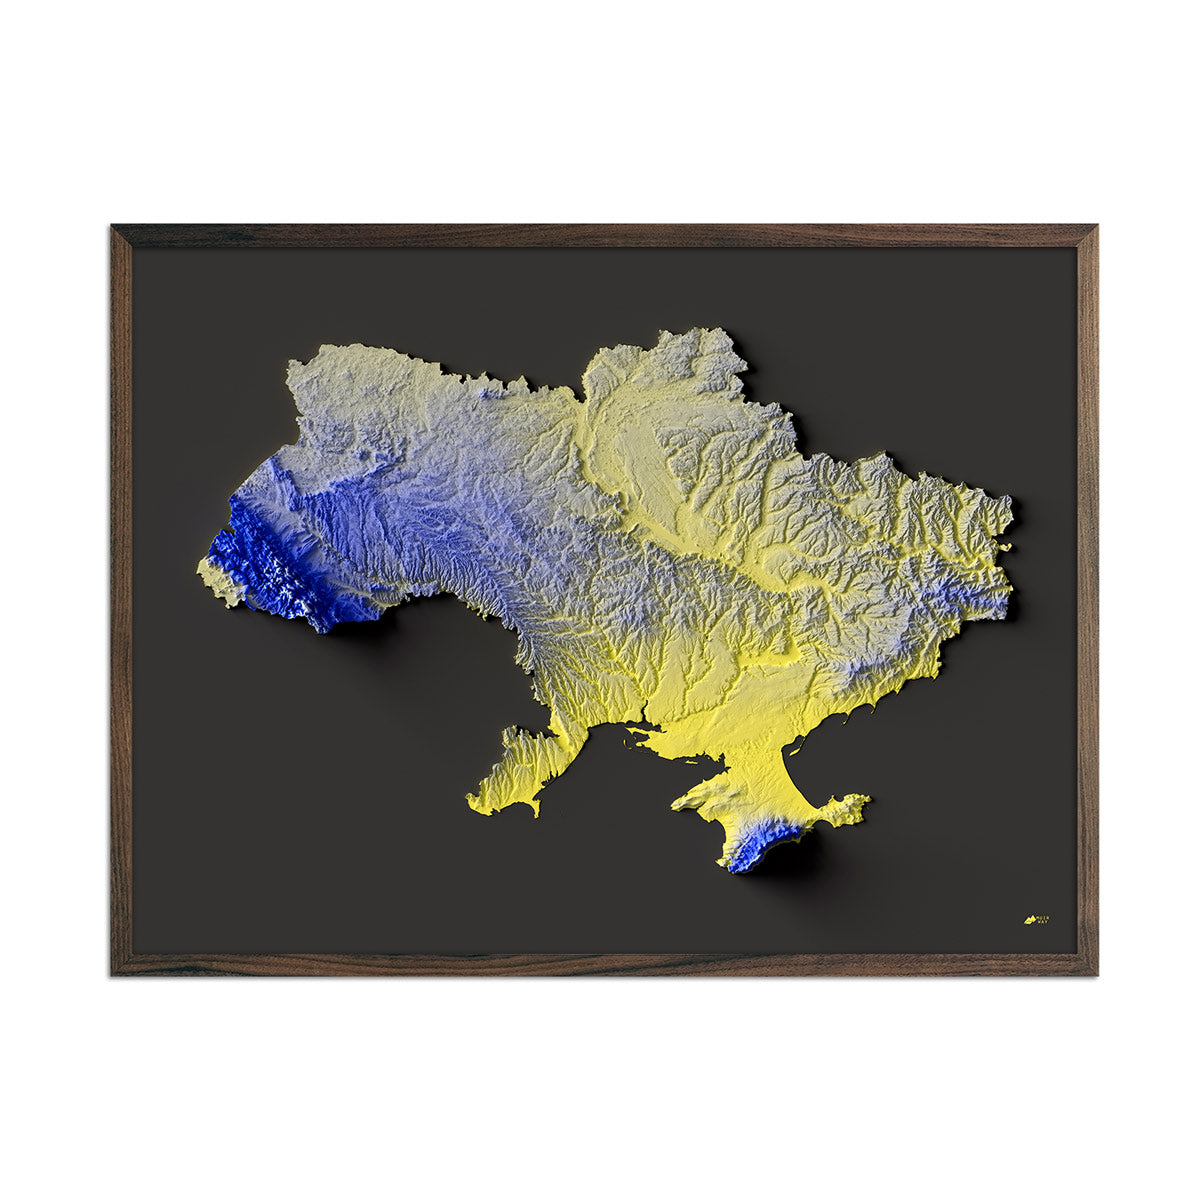 Ukraine Elevation Map